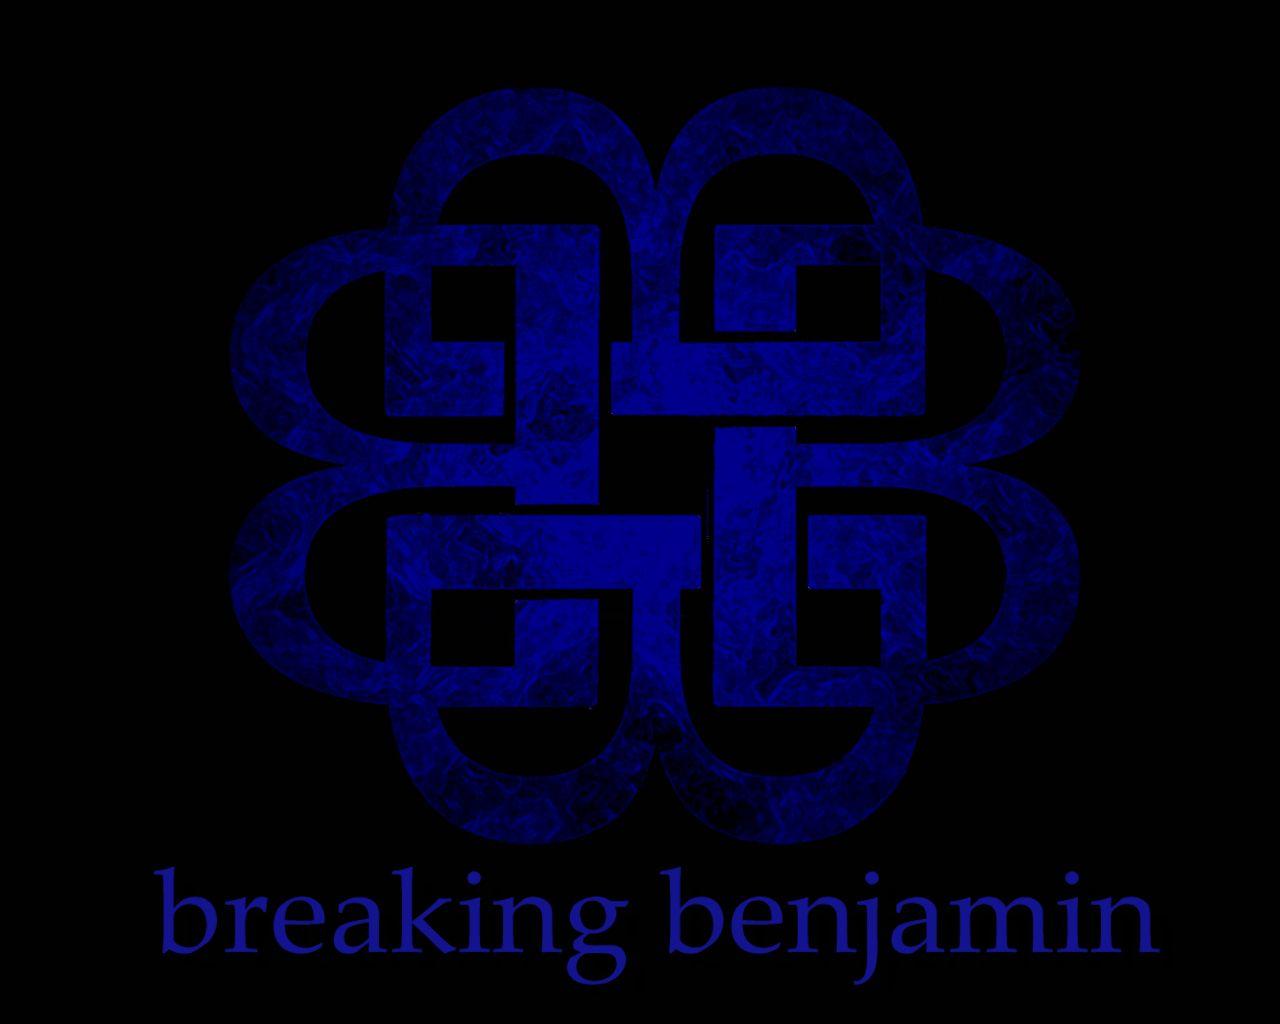 Breaking Benjamin Logo - Breaking Benjamin images breaking benjamin logo HD wallpaper and ...